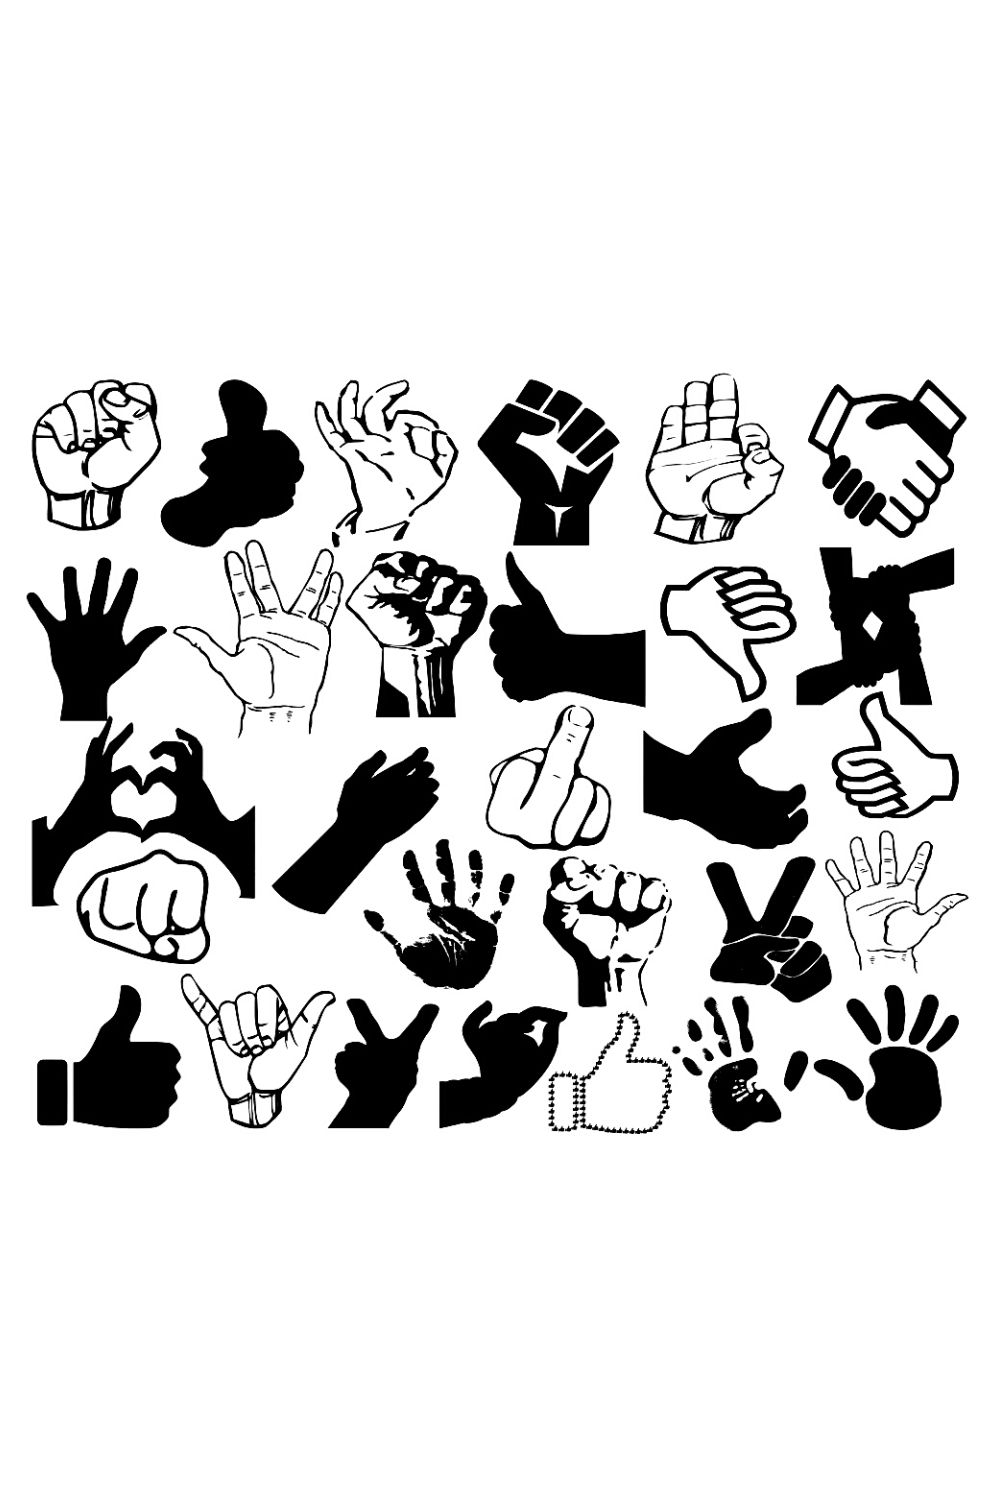 Hand Gesture Silhouette Bundles pinterest image.